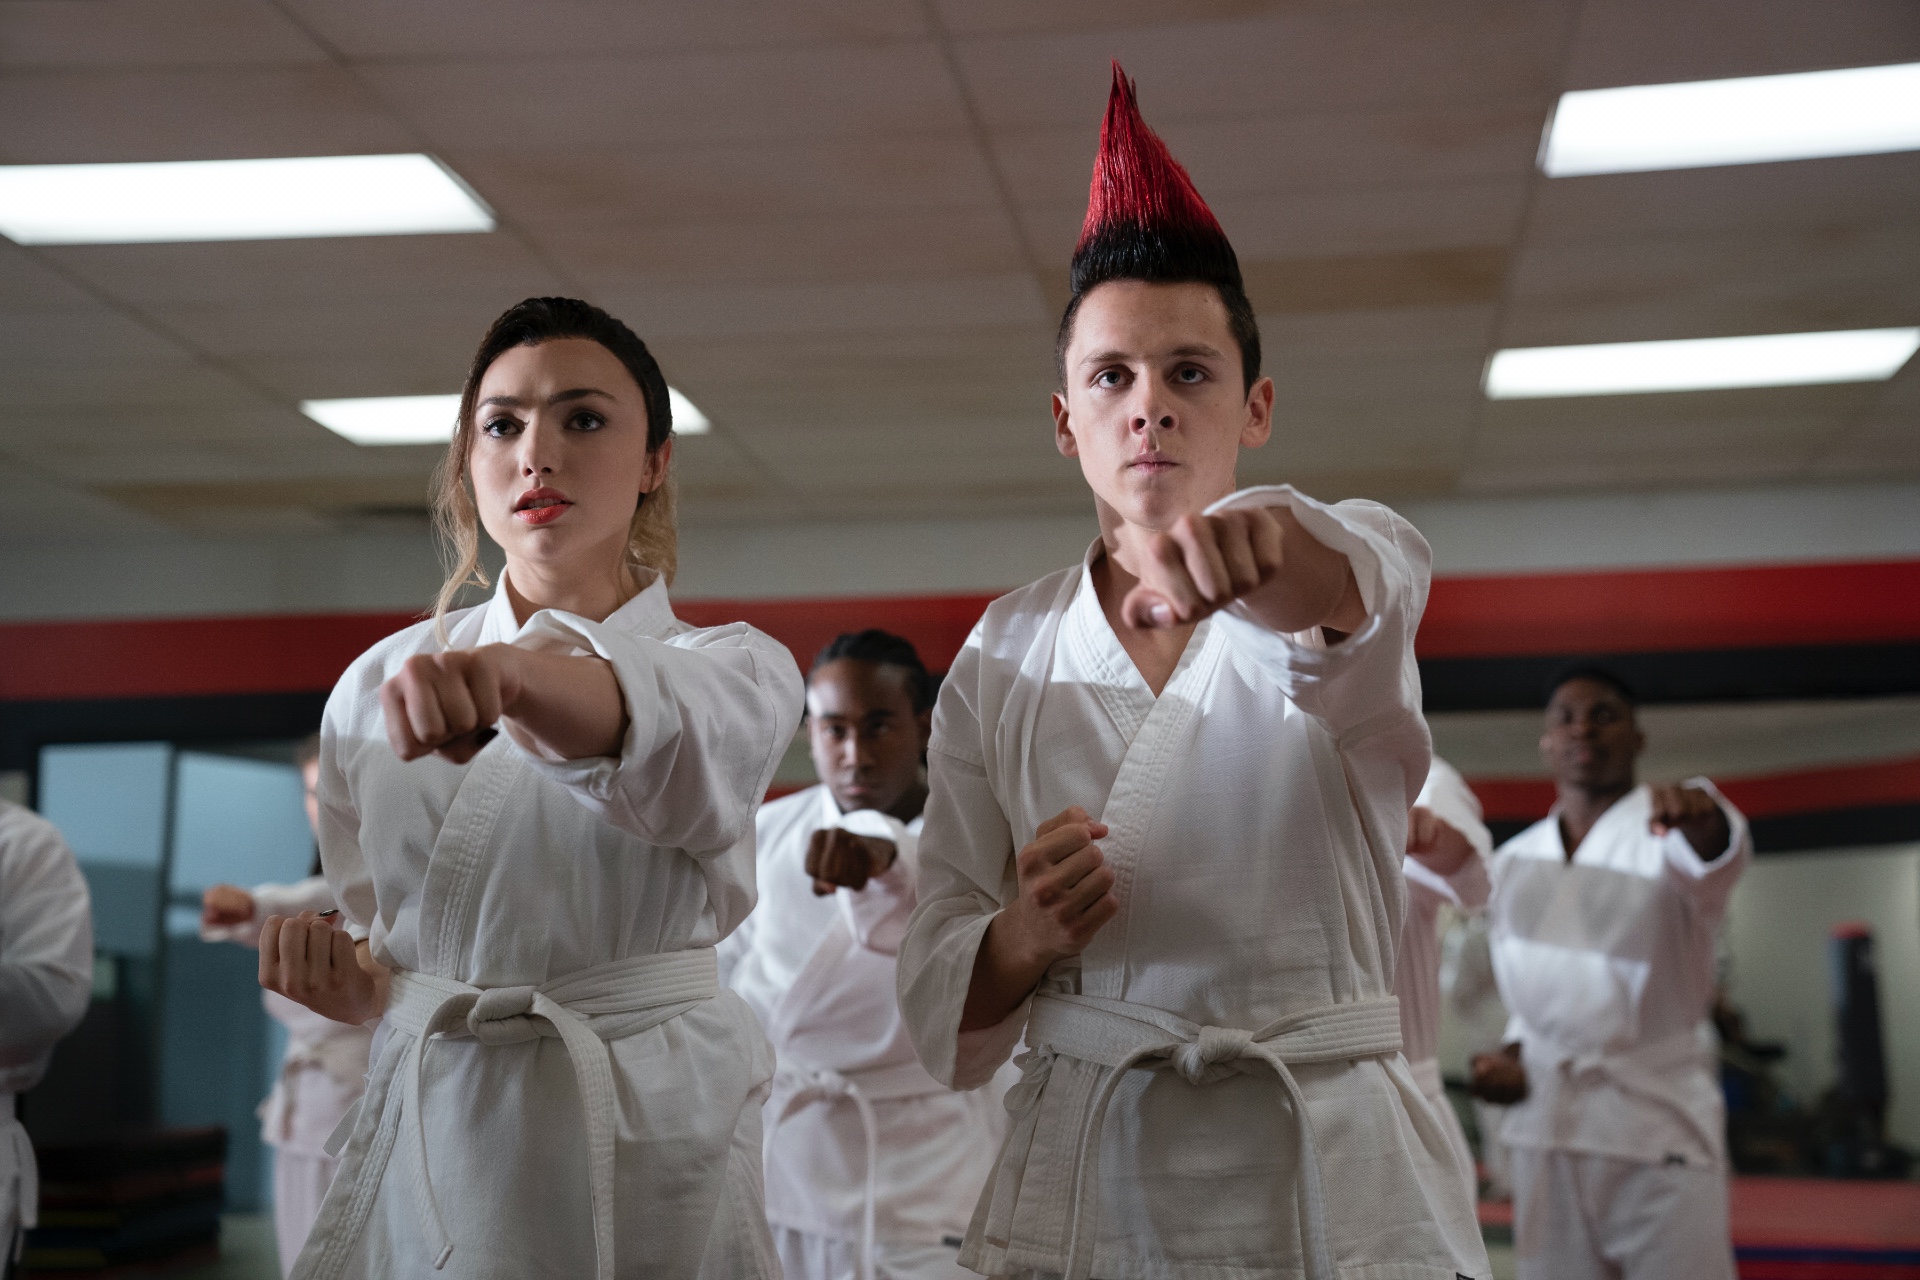 The Karate Kid video argues Daniel LaRusso is the movie's villain